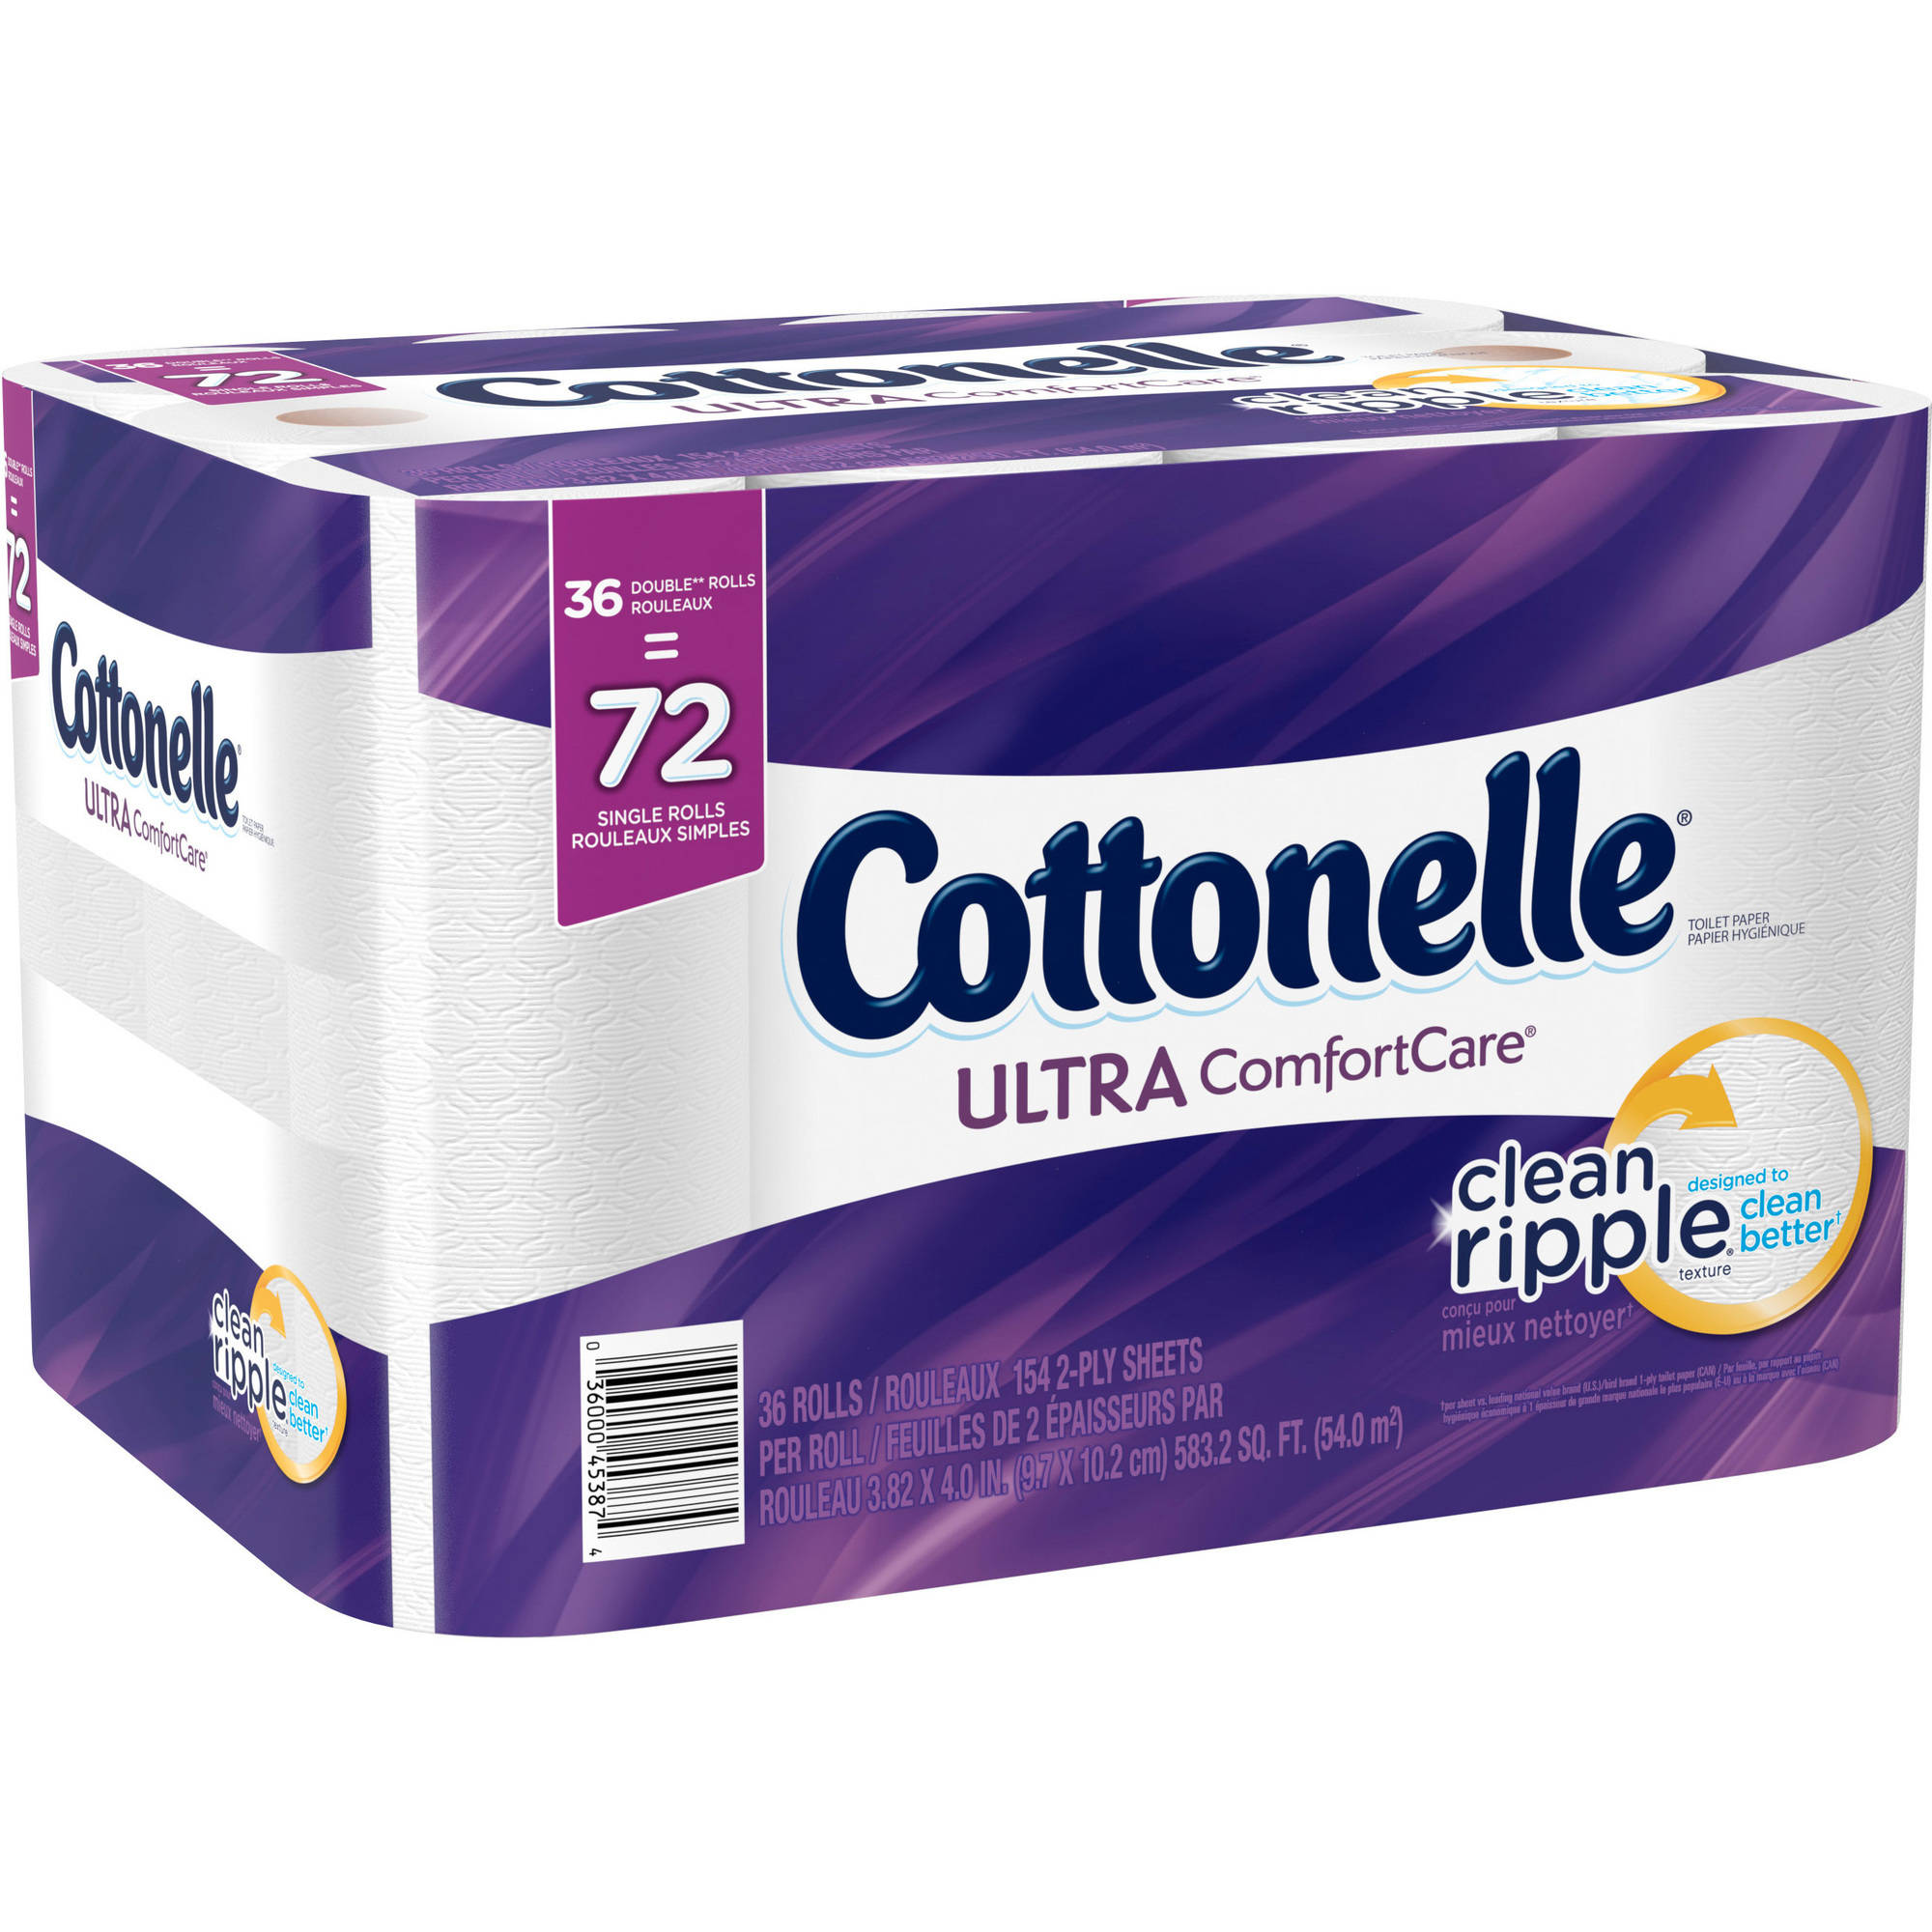 Cottonelle Ultra ComfortCare Toilet Paper, 36 Double Rolls - image 2 of 5